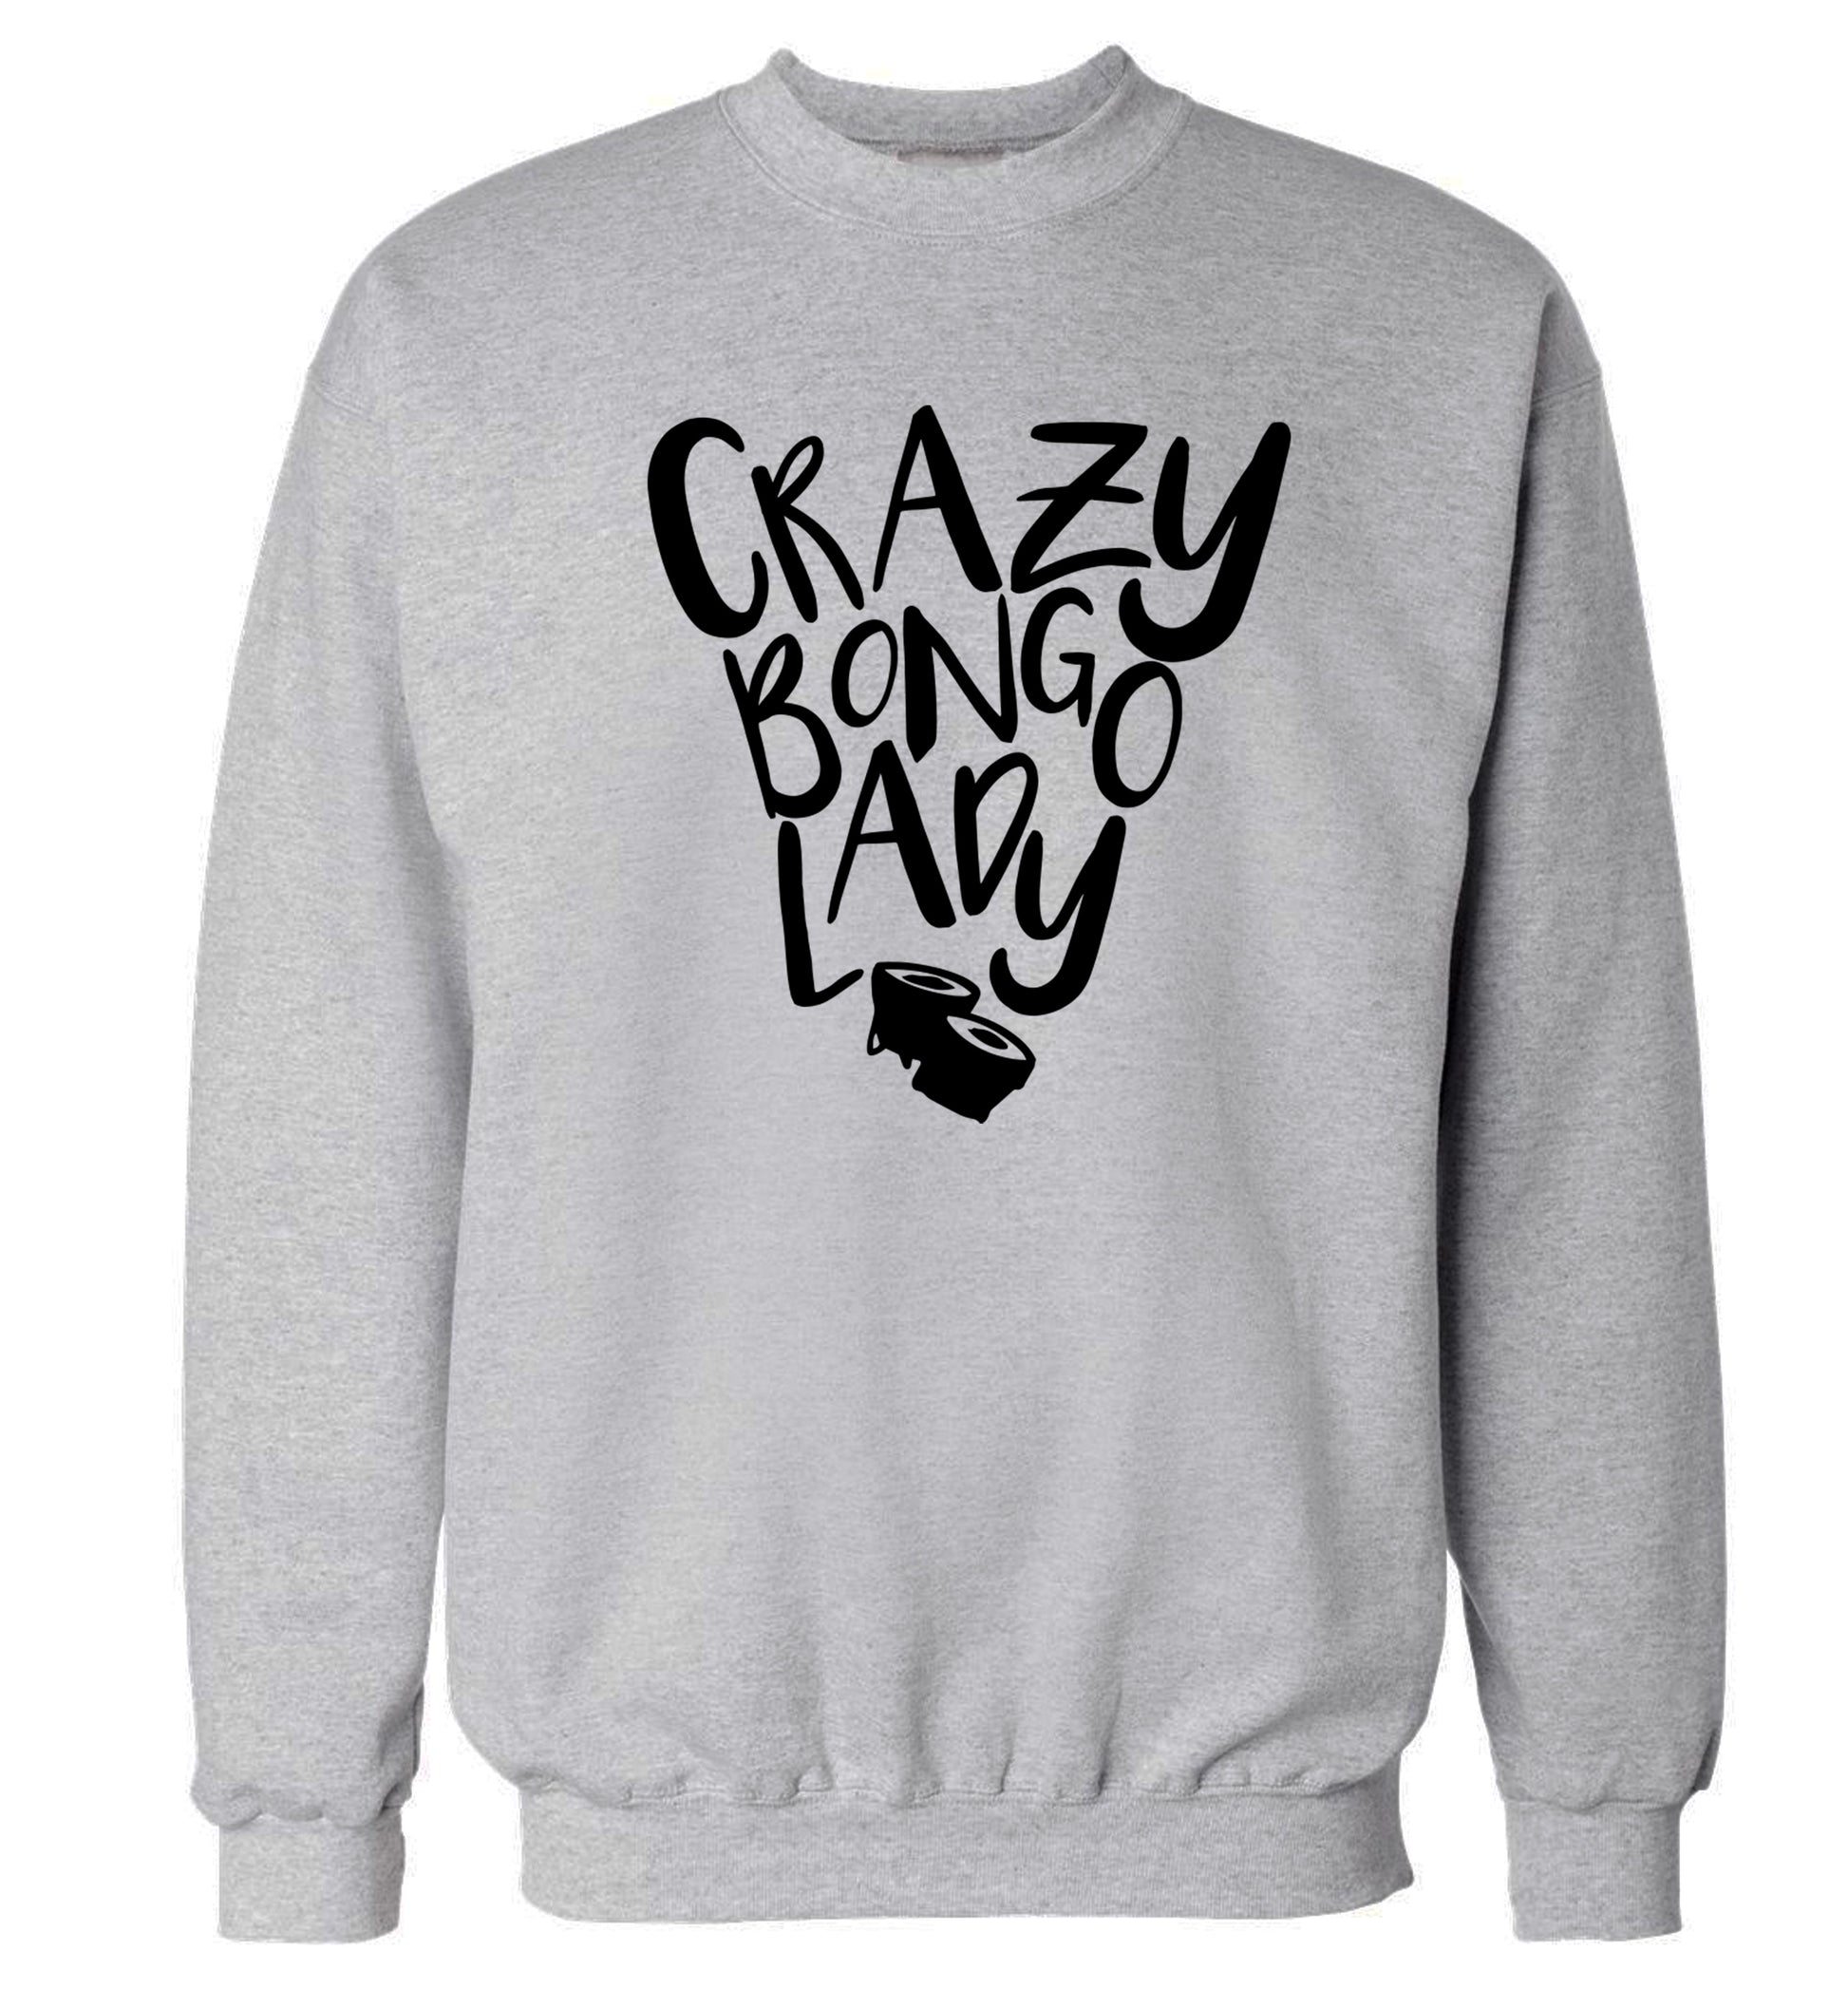 Crazy bongo lady Adult's unisex grey Sweater 2XL